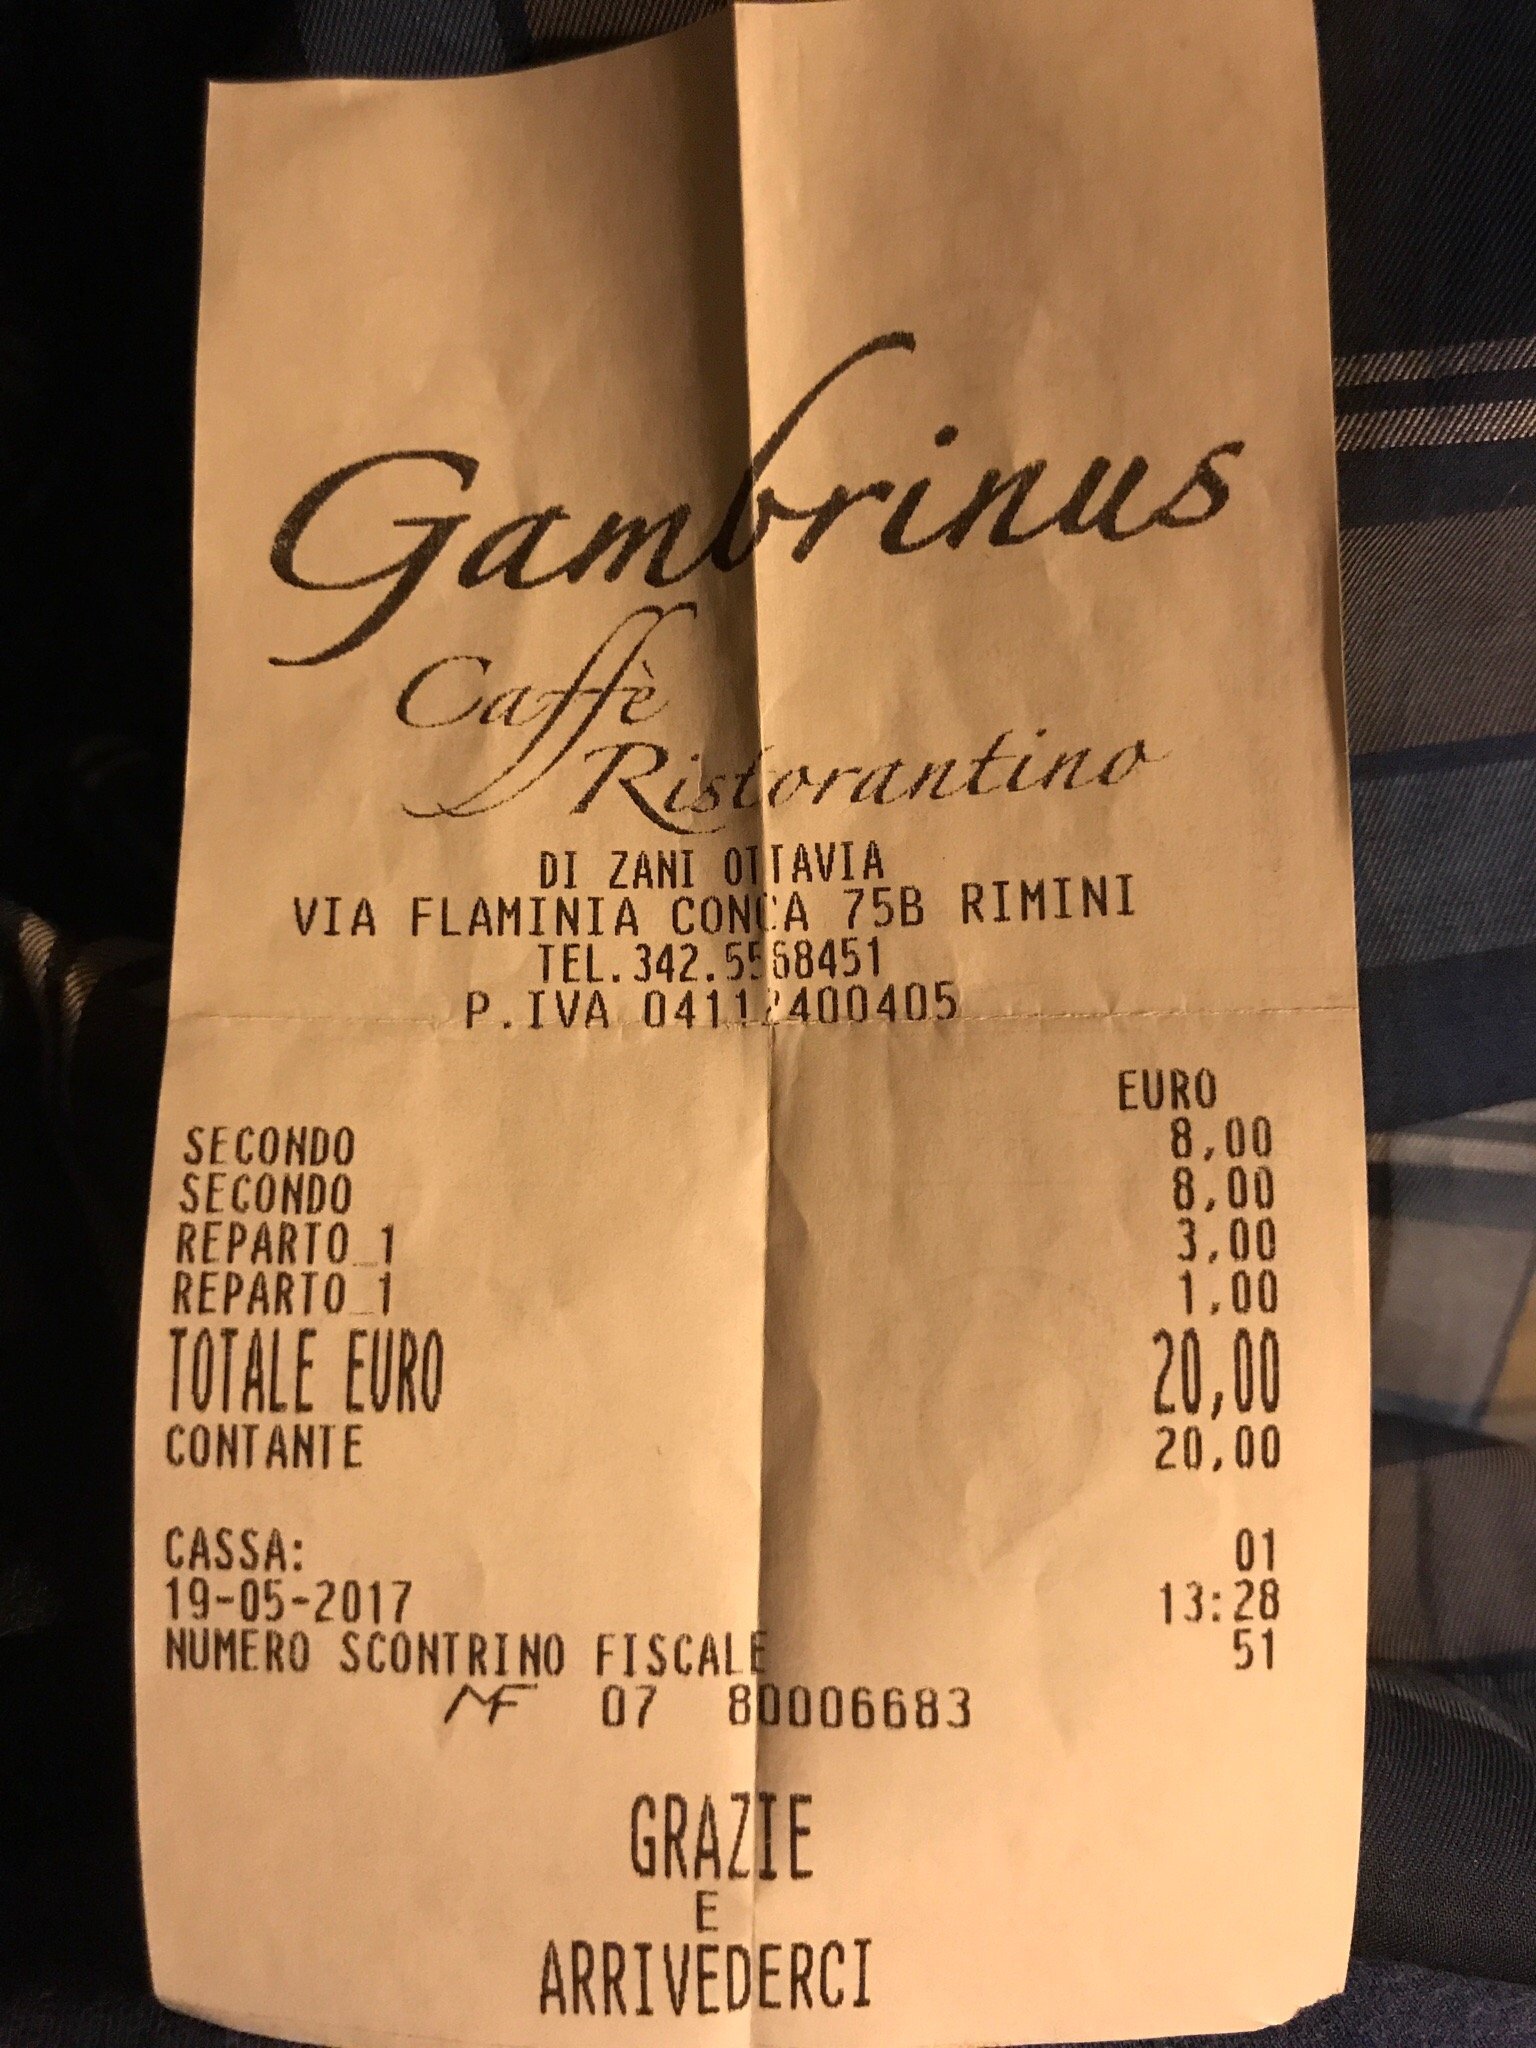 Bar Gambrinus